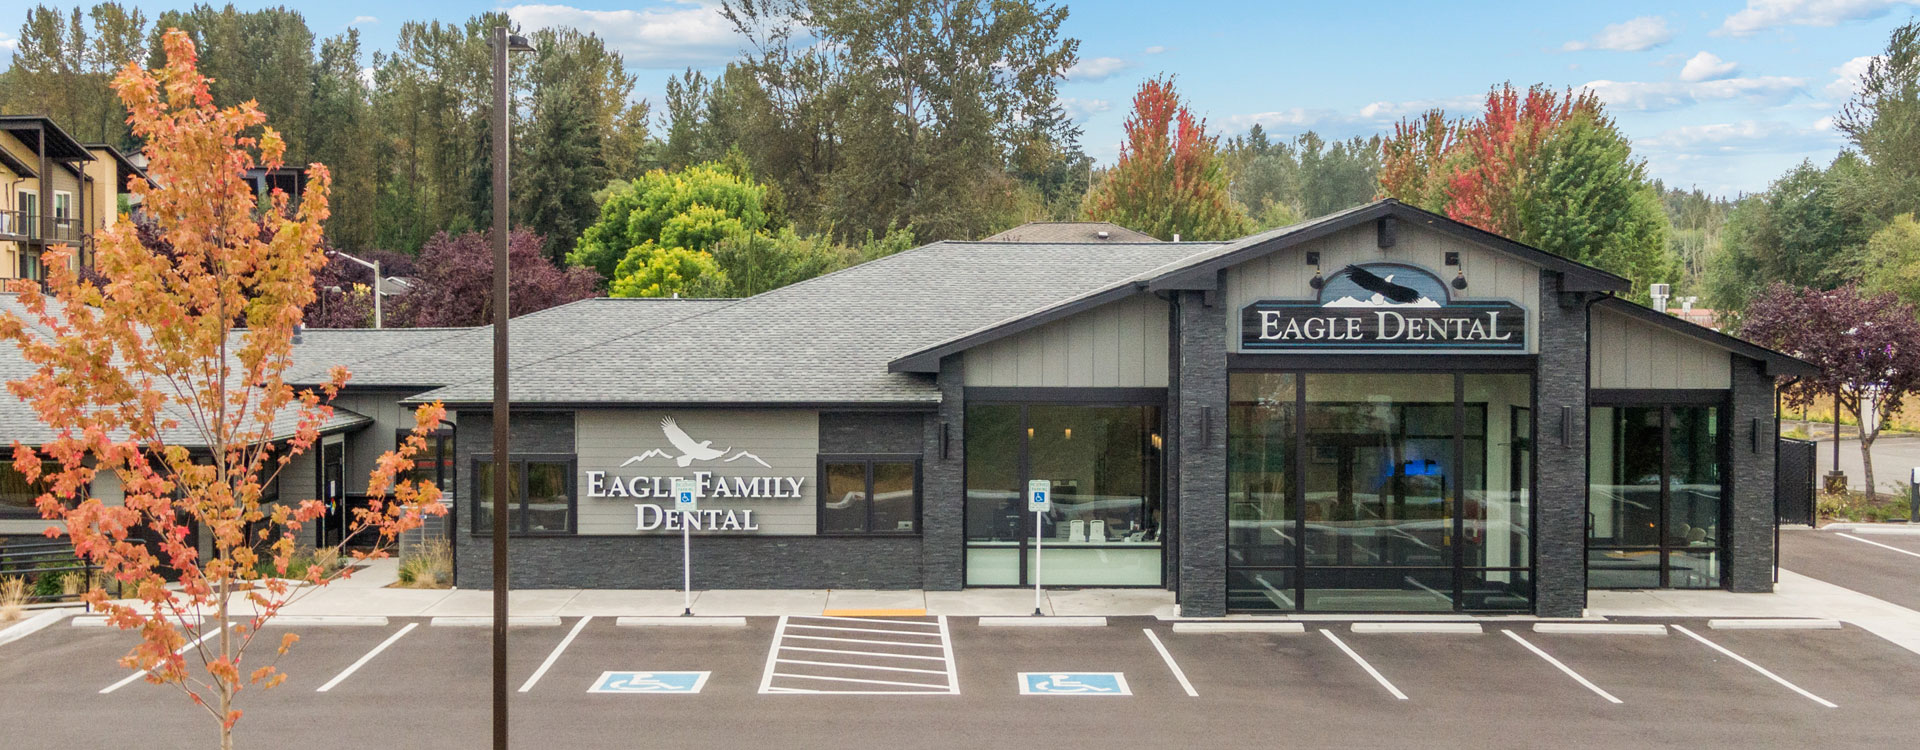 Eagle Family Dental Building